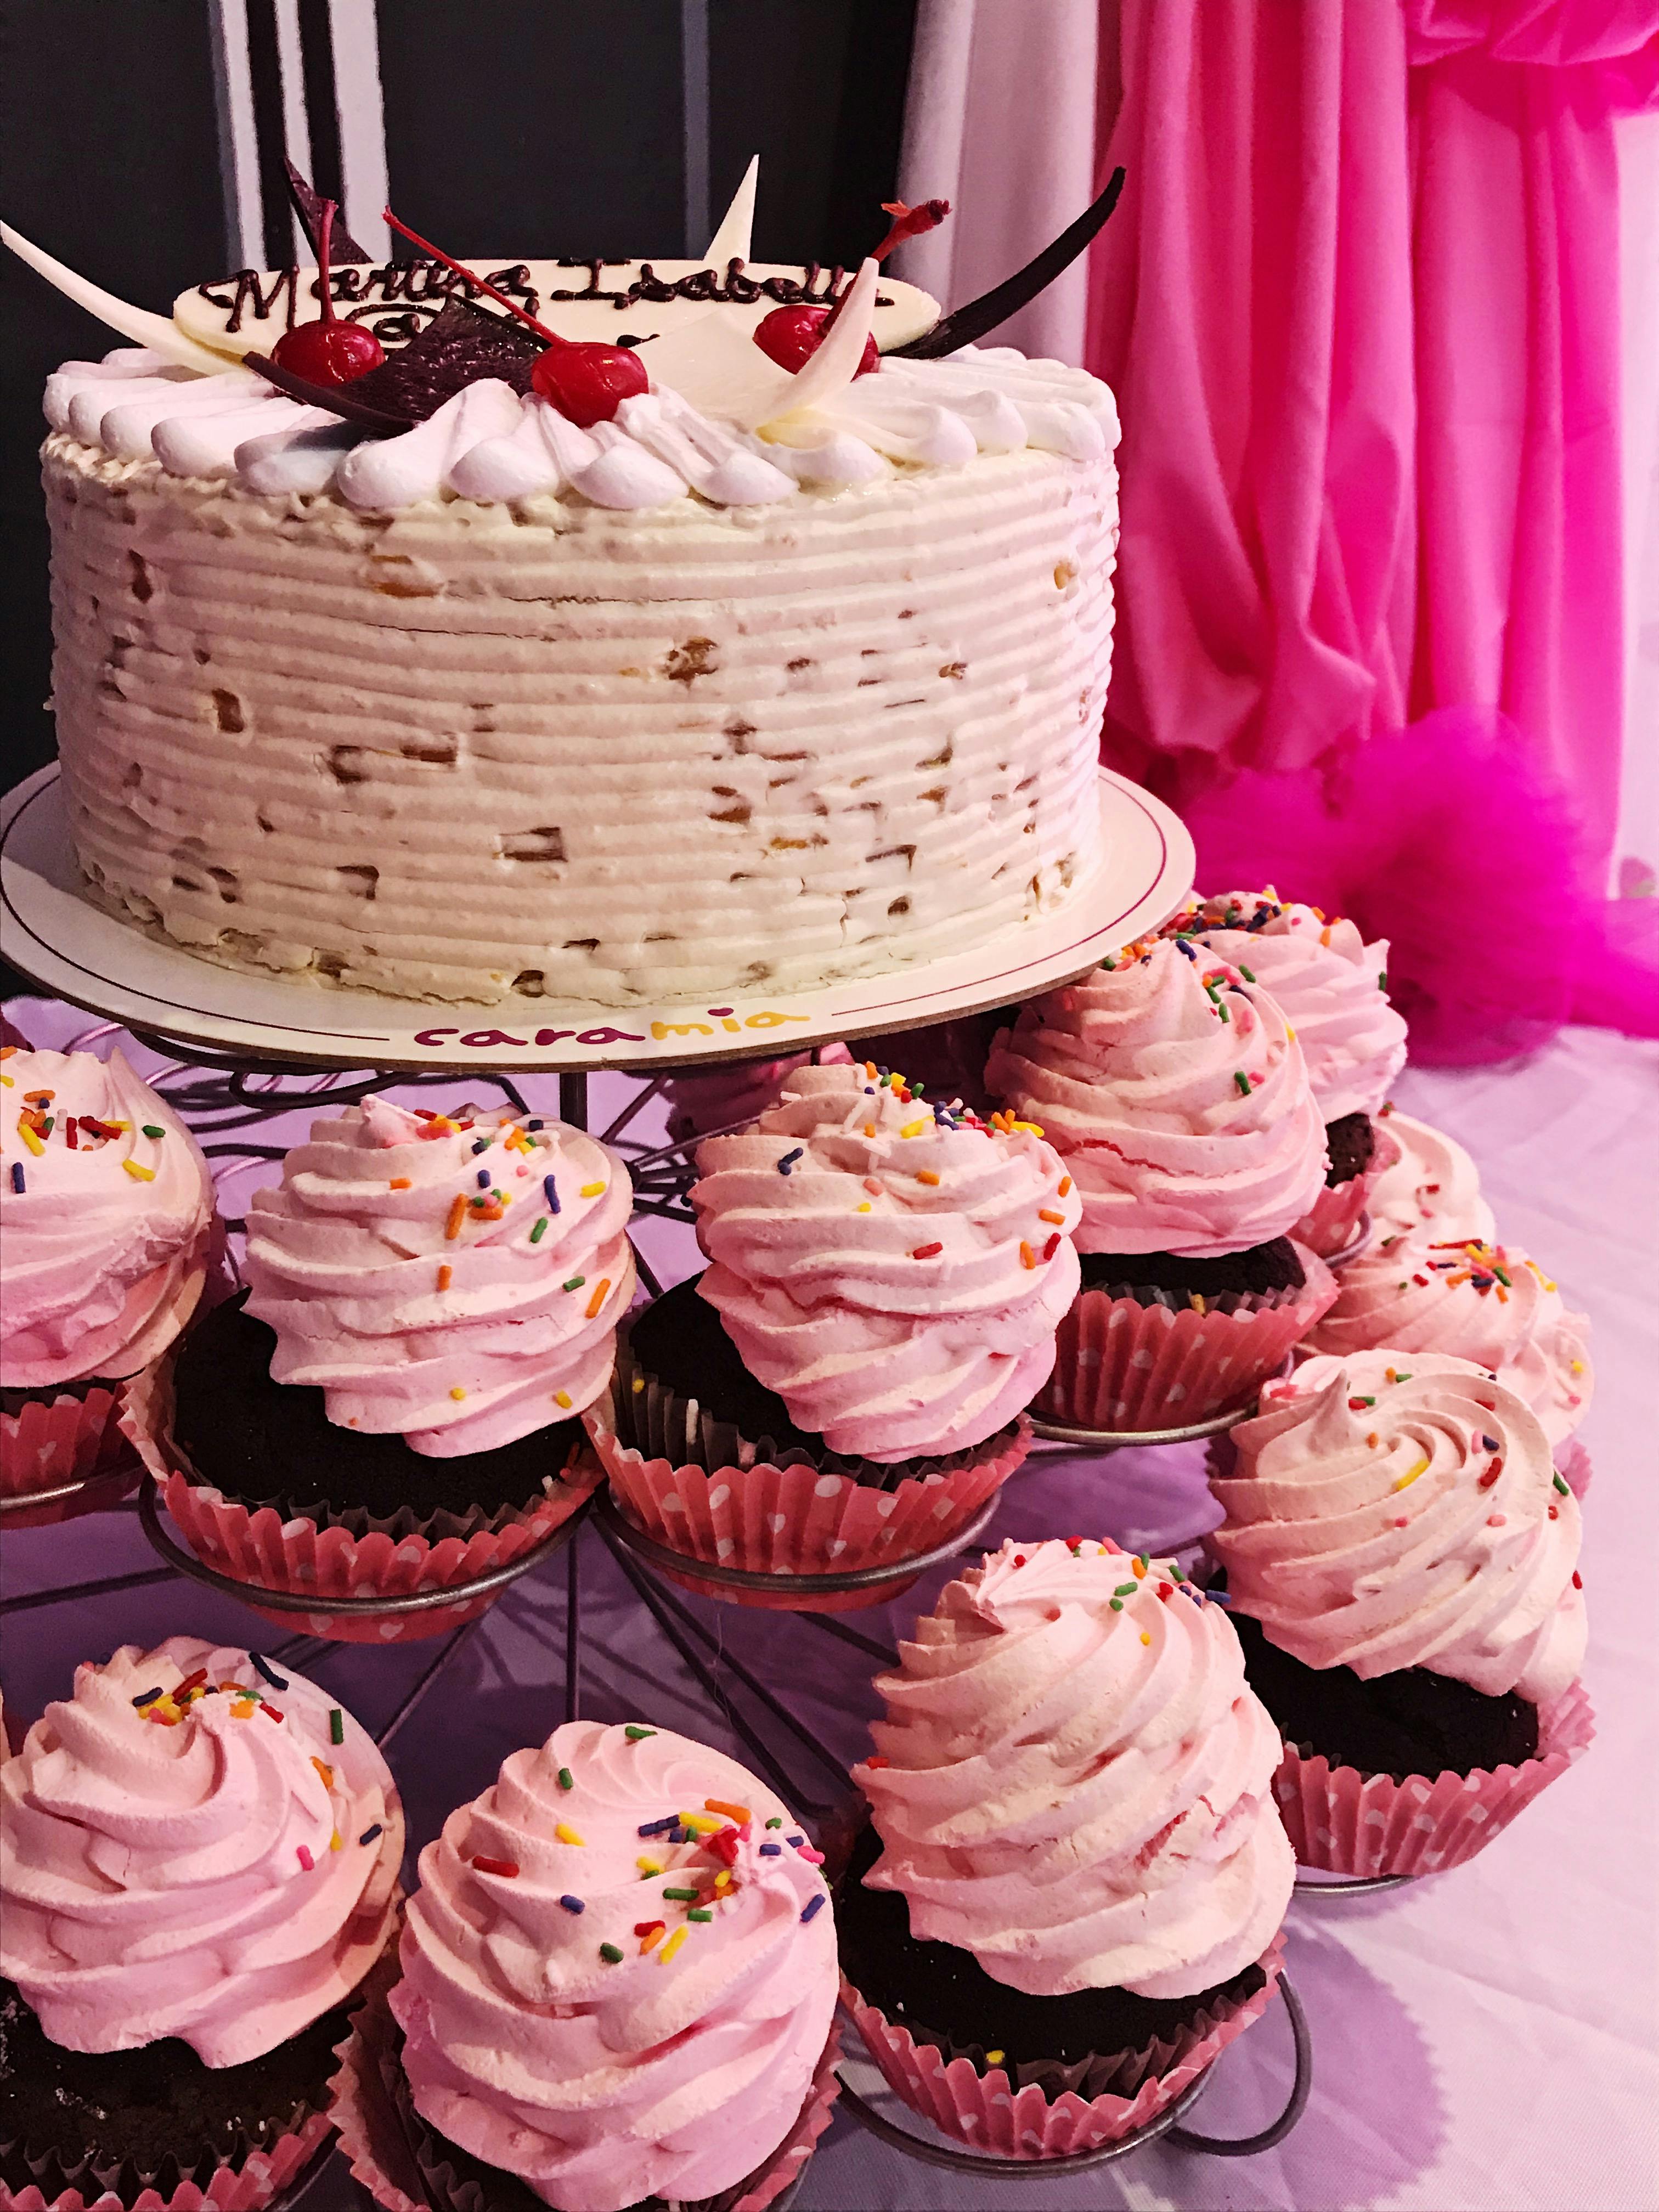 Free stock photo of #cake #food #sweet #pink